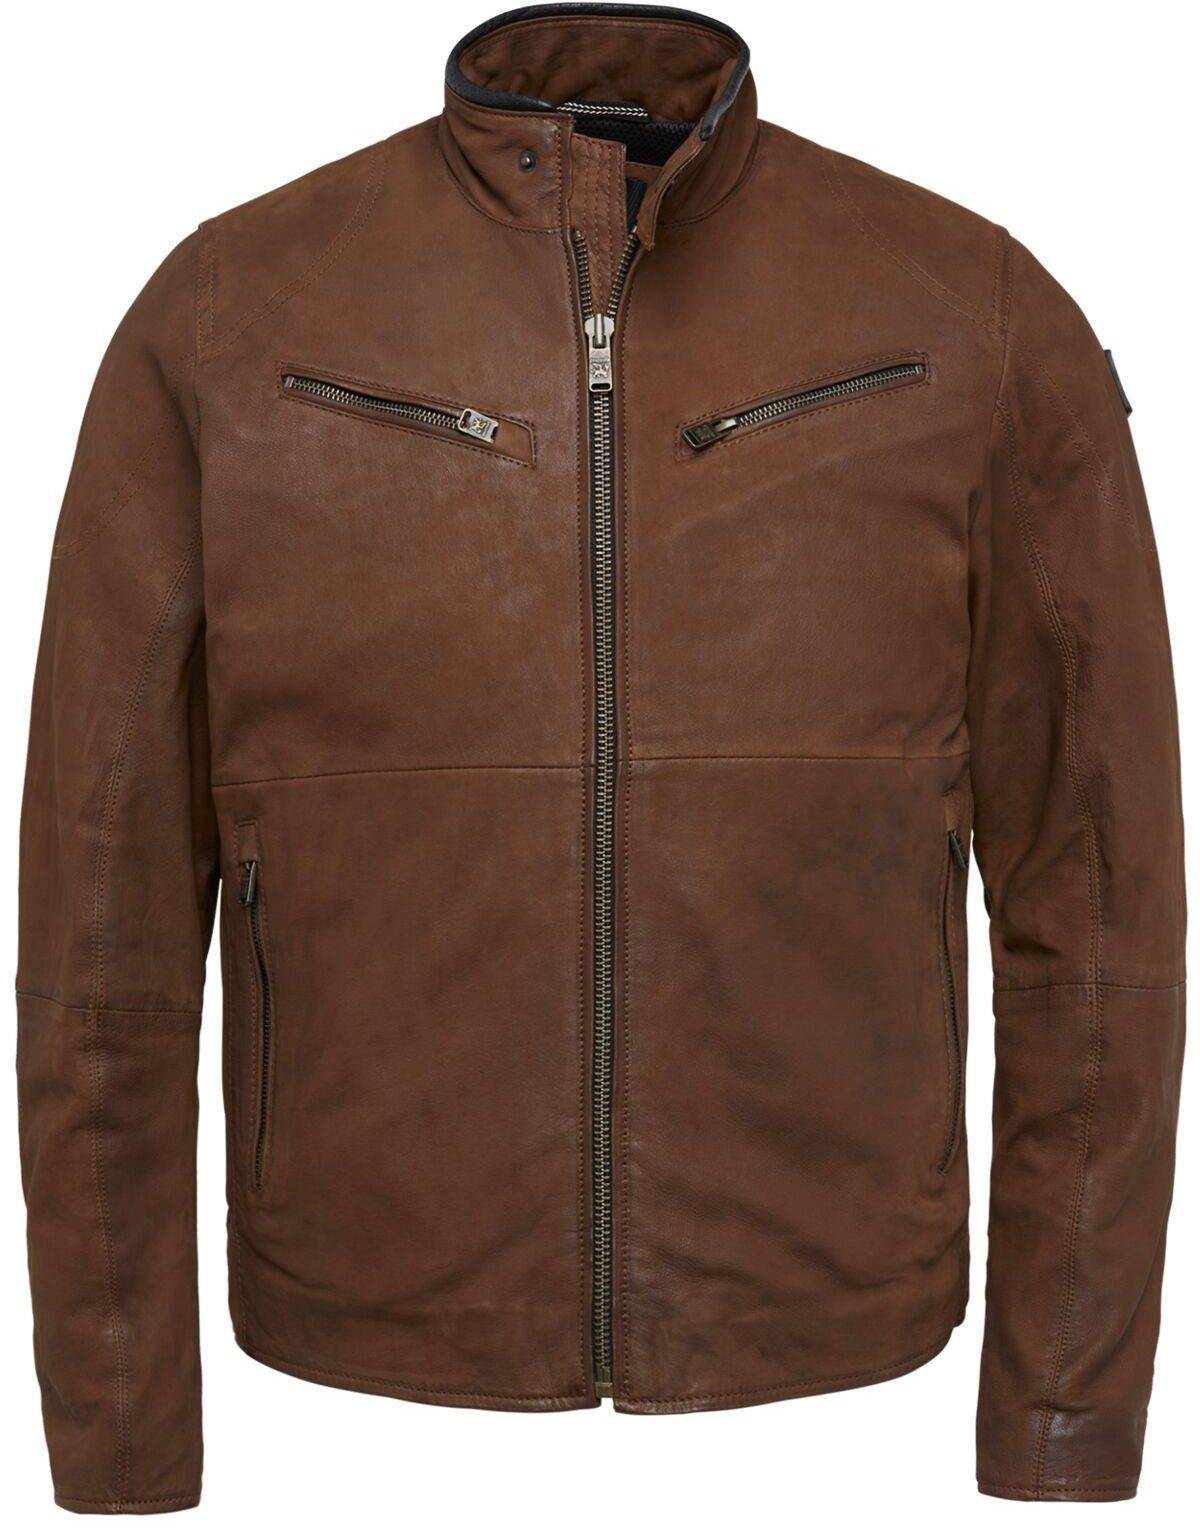 Vanguard Leather Jacket Brown size XL